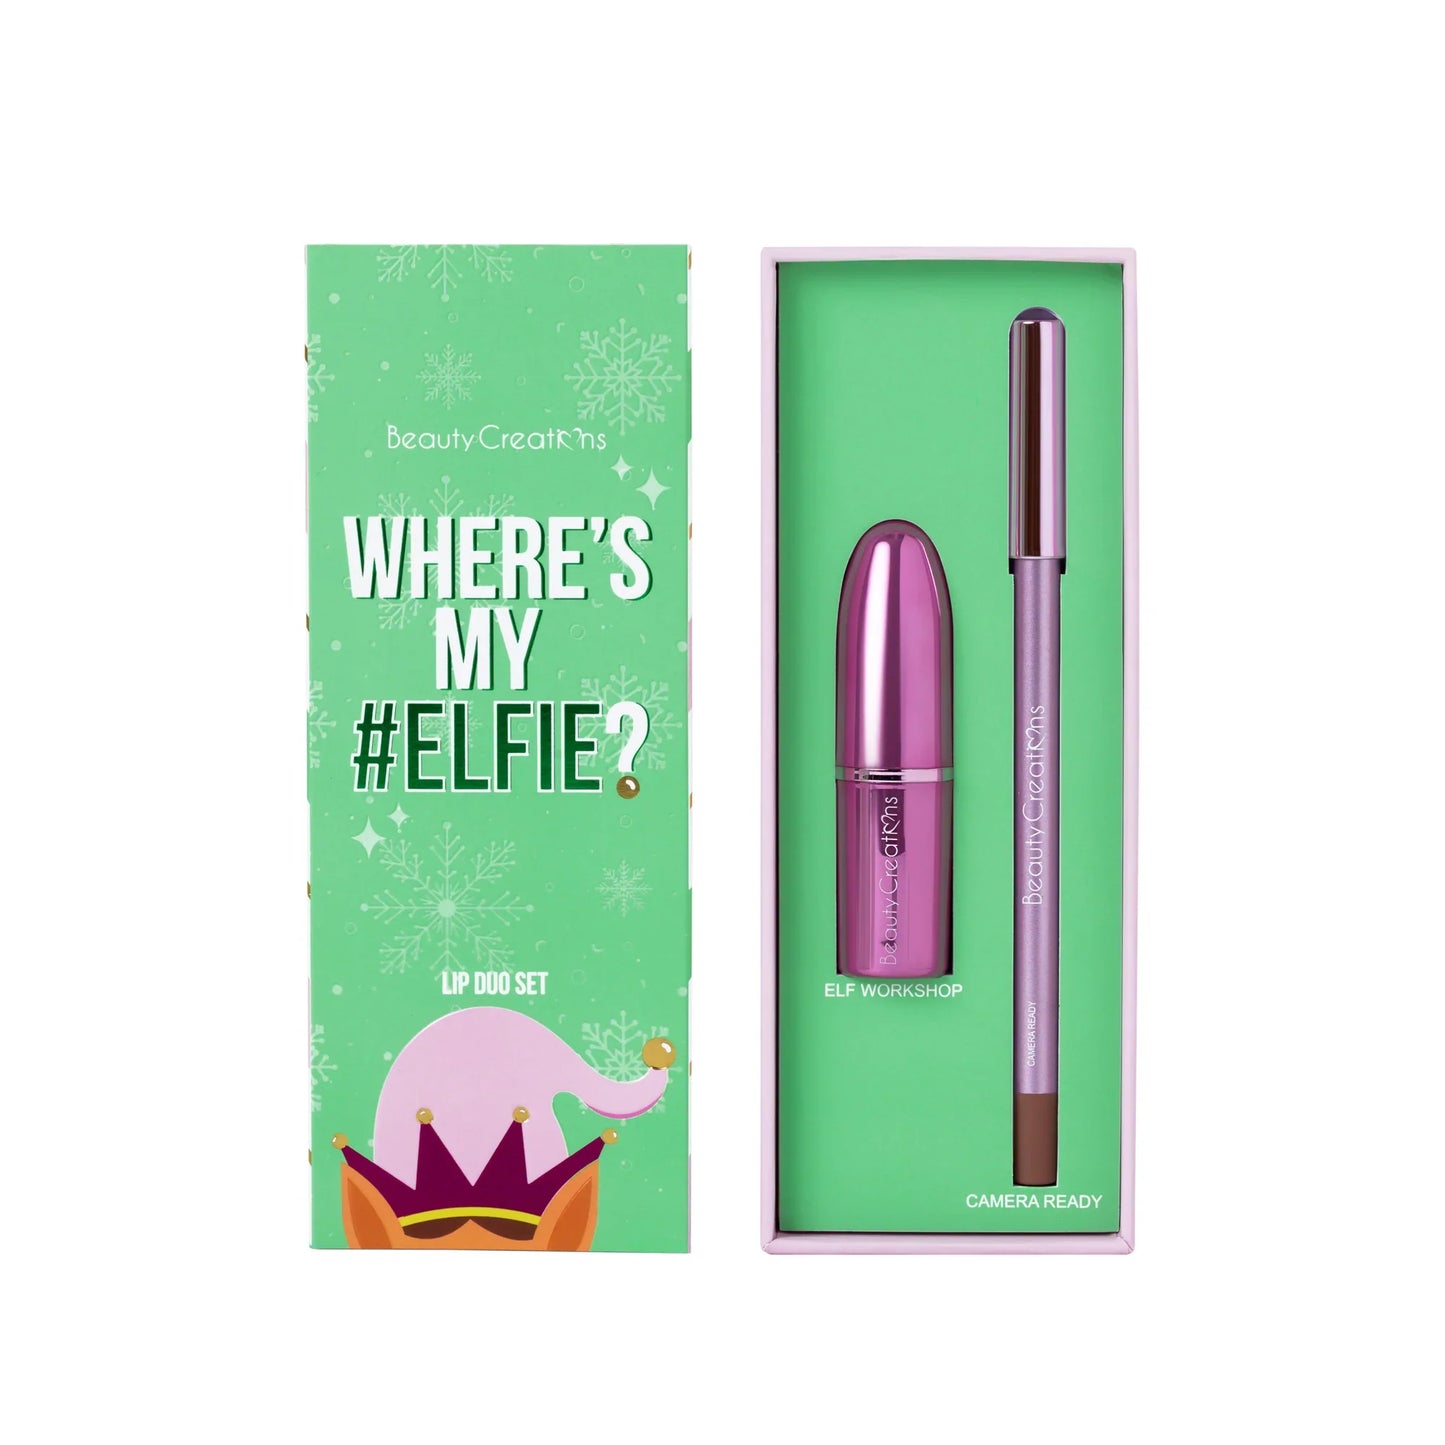 WHERE'S MY #ELFIE?